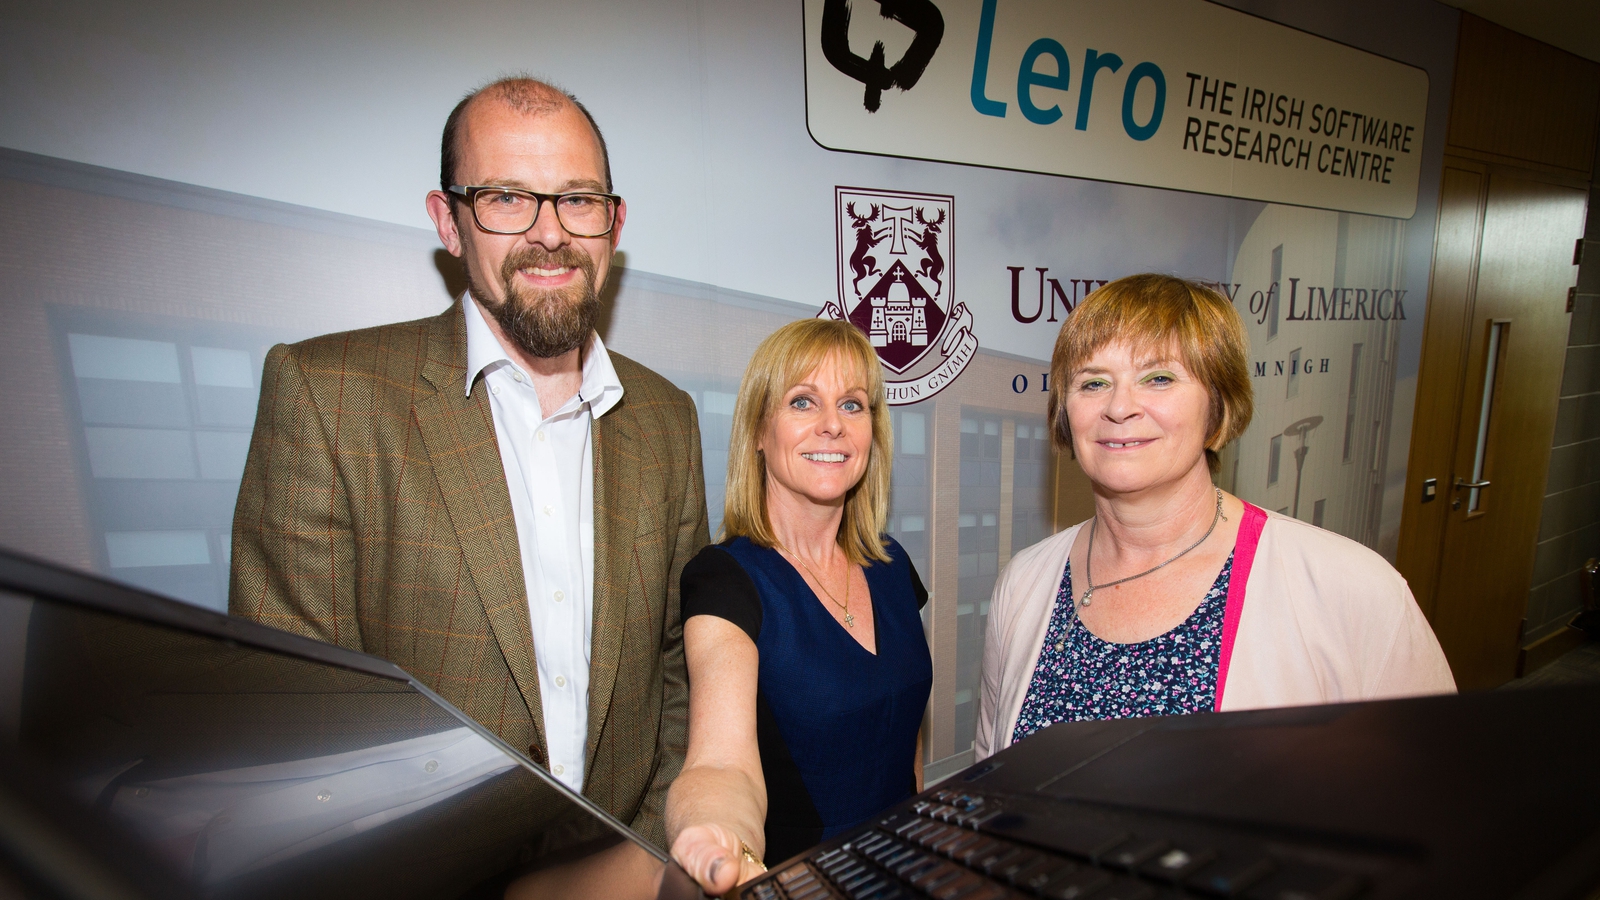 Science Foundation Ireland - Researchers at Lero - The Irish